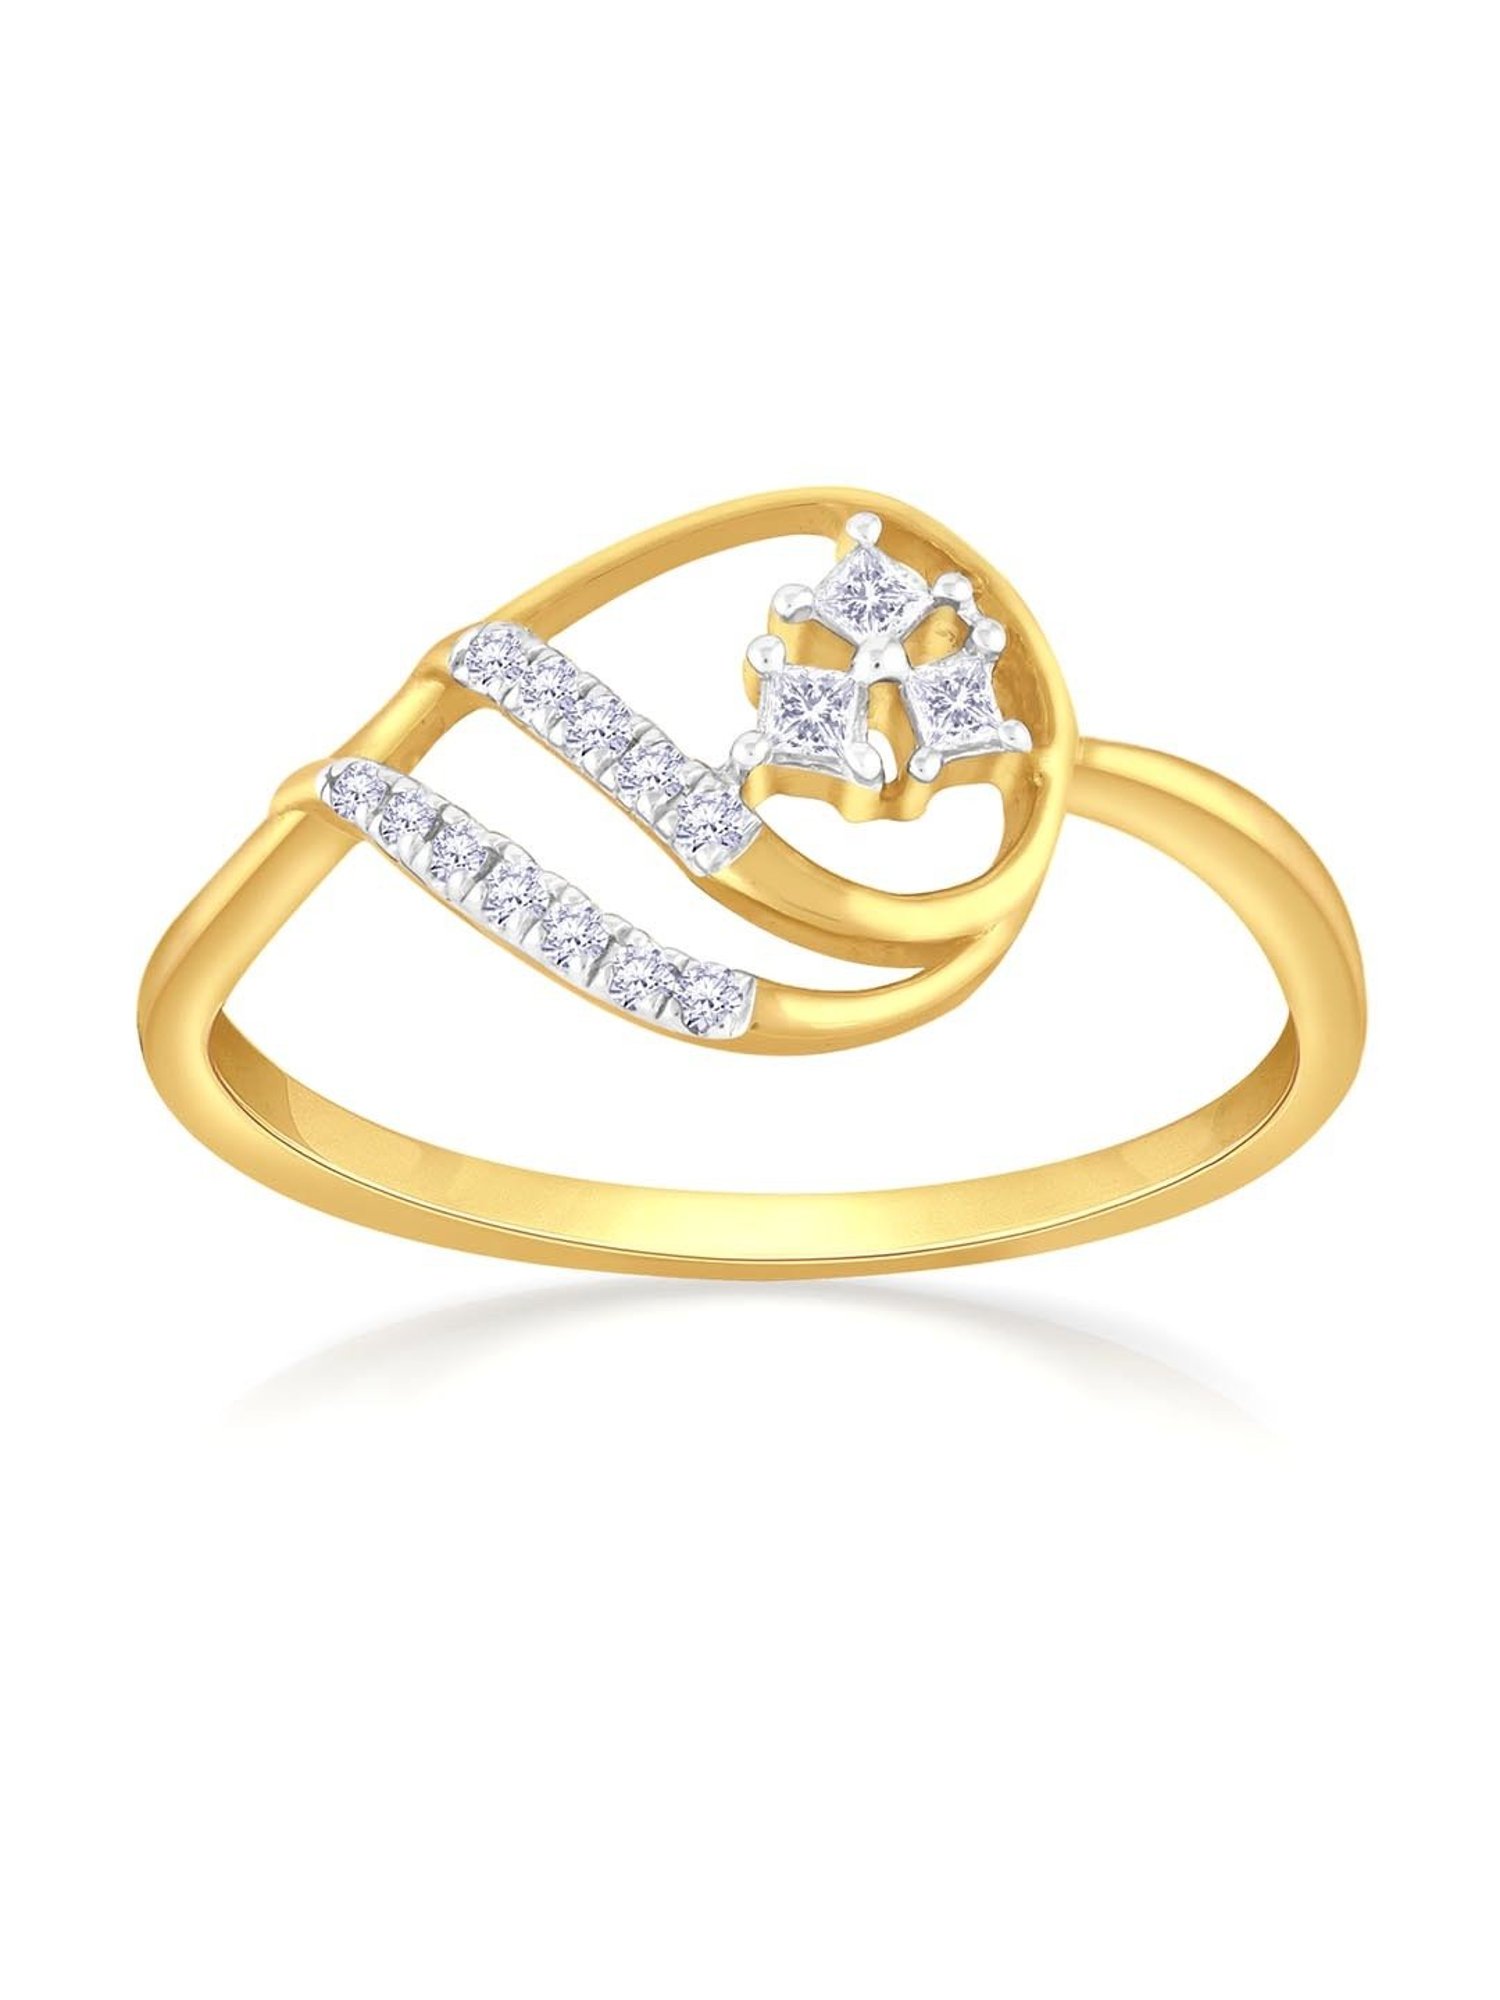 Buy Malabar Gold Ring USRG2492075 for Men Online | Malabar Gold & Diamonds